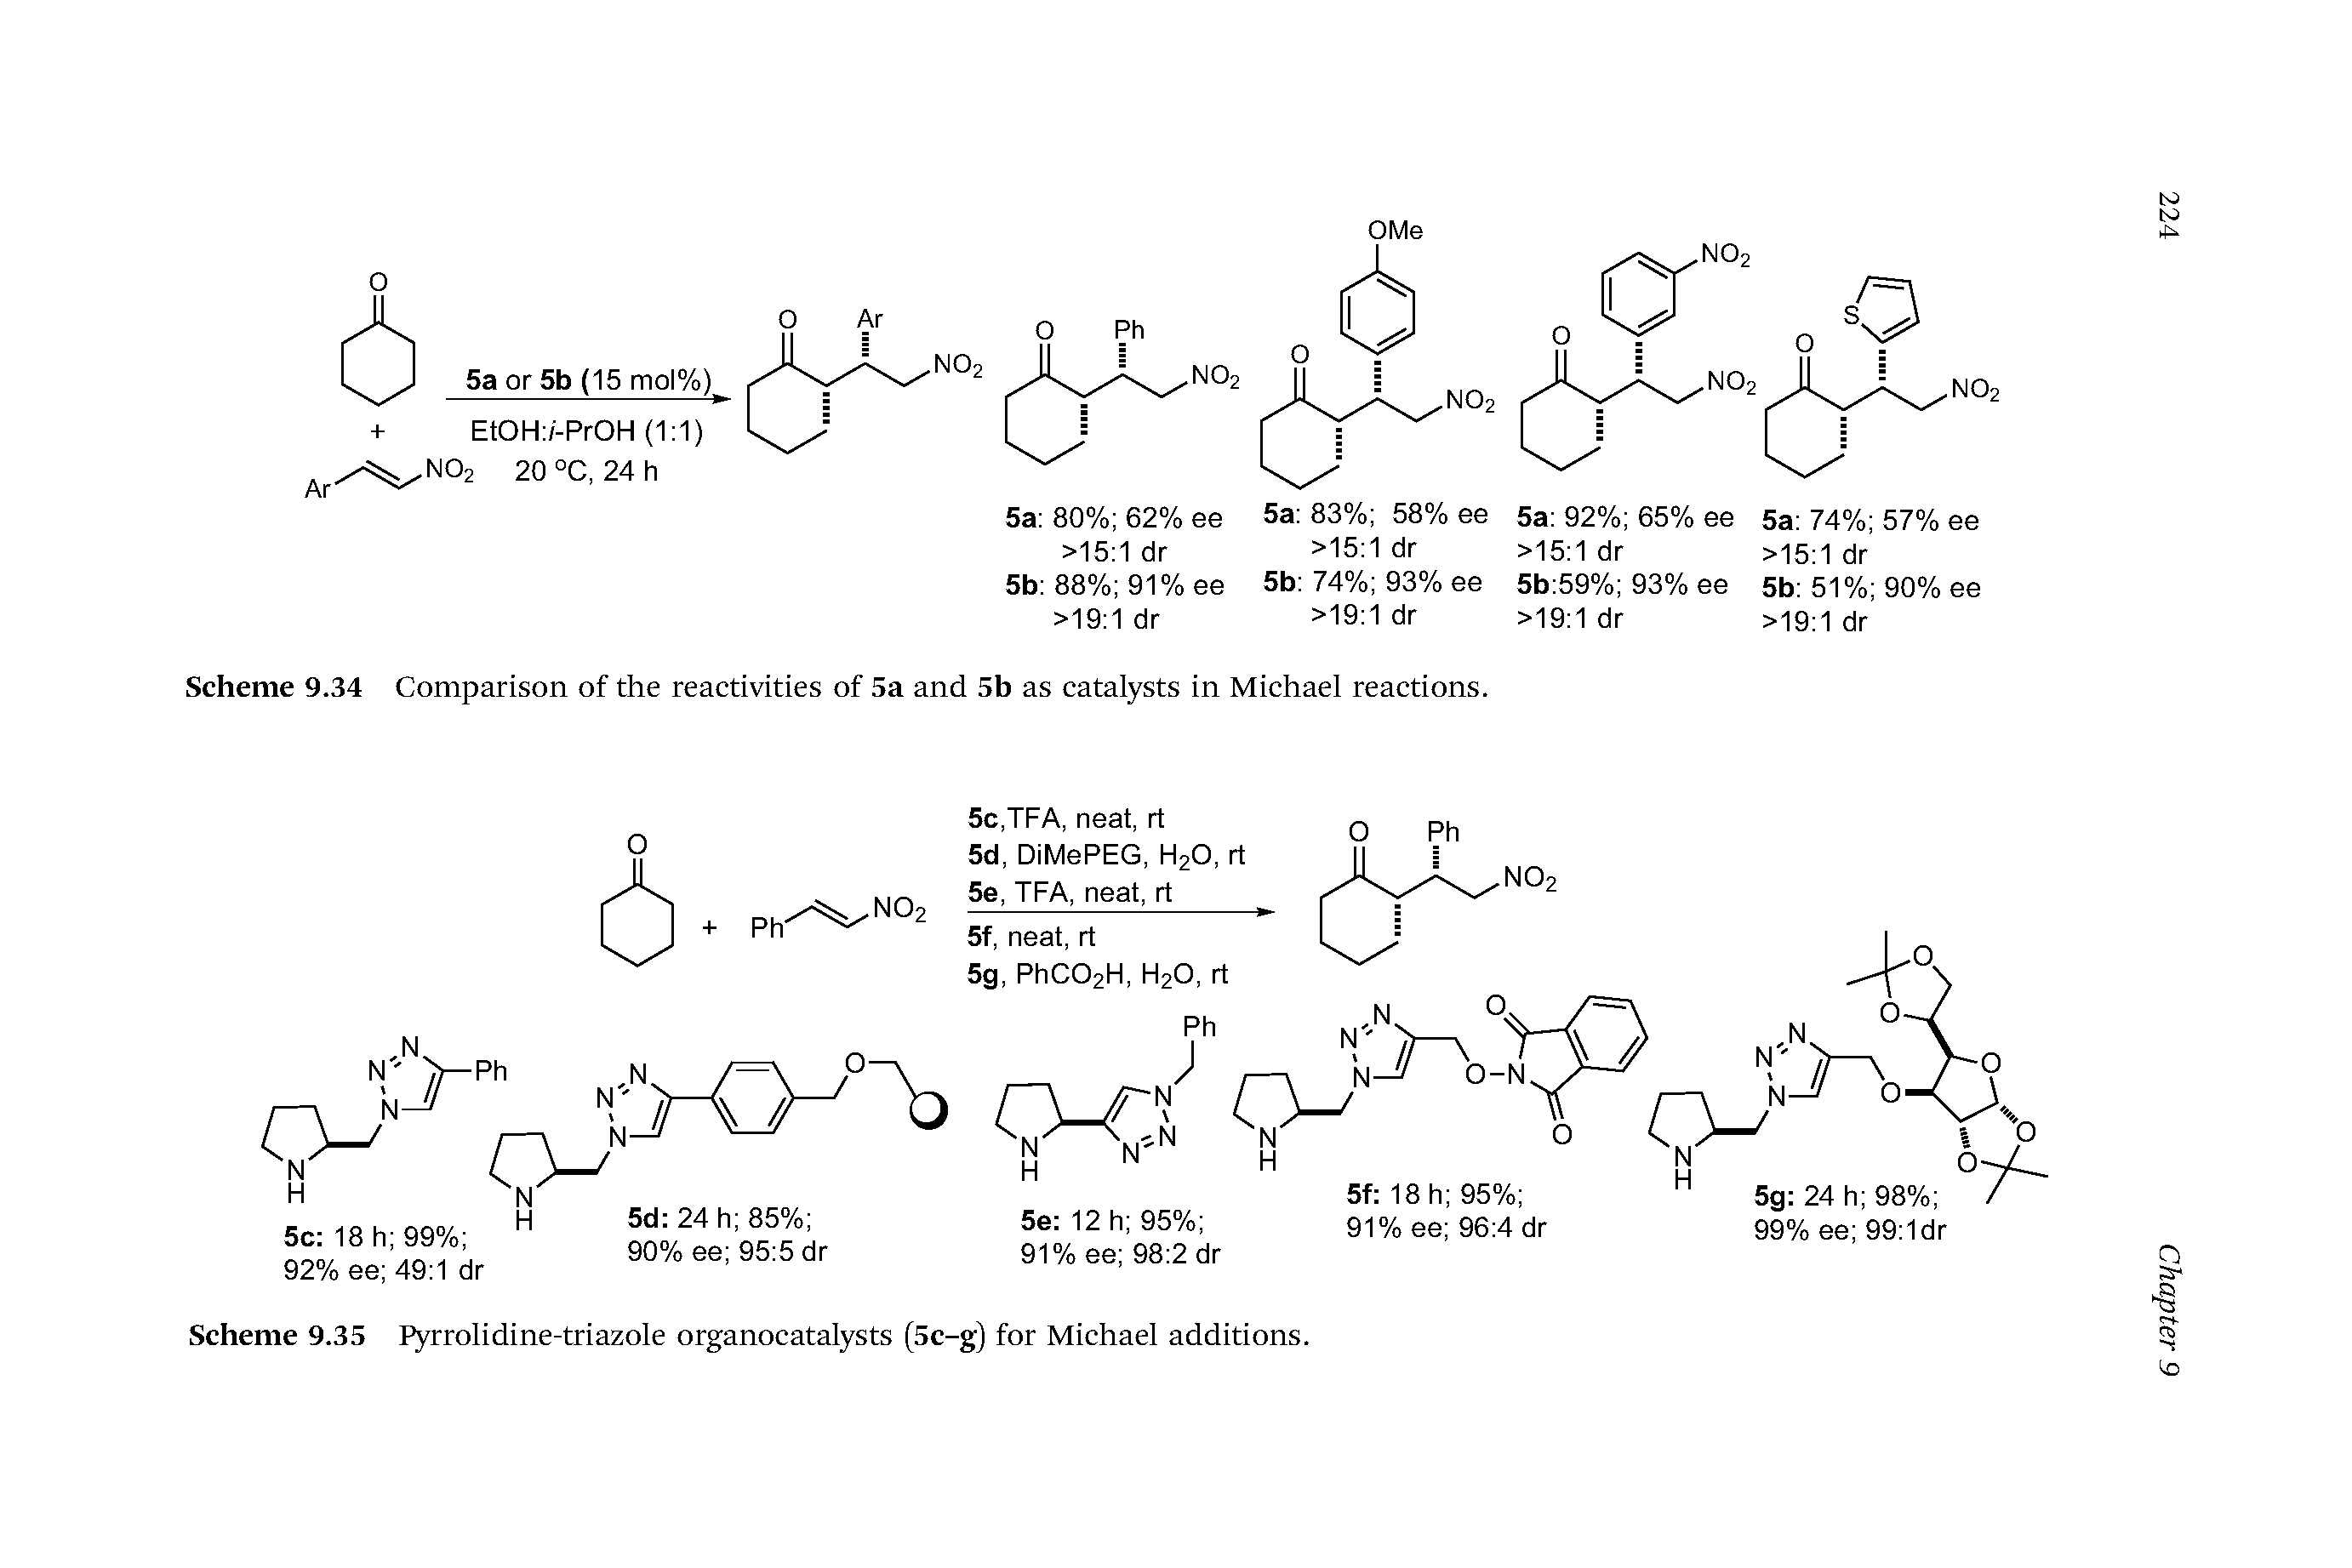 Scheme 9.35 Pyrrolidine-triazole organocatalysts (5c-g) for Michael additions.